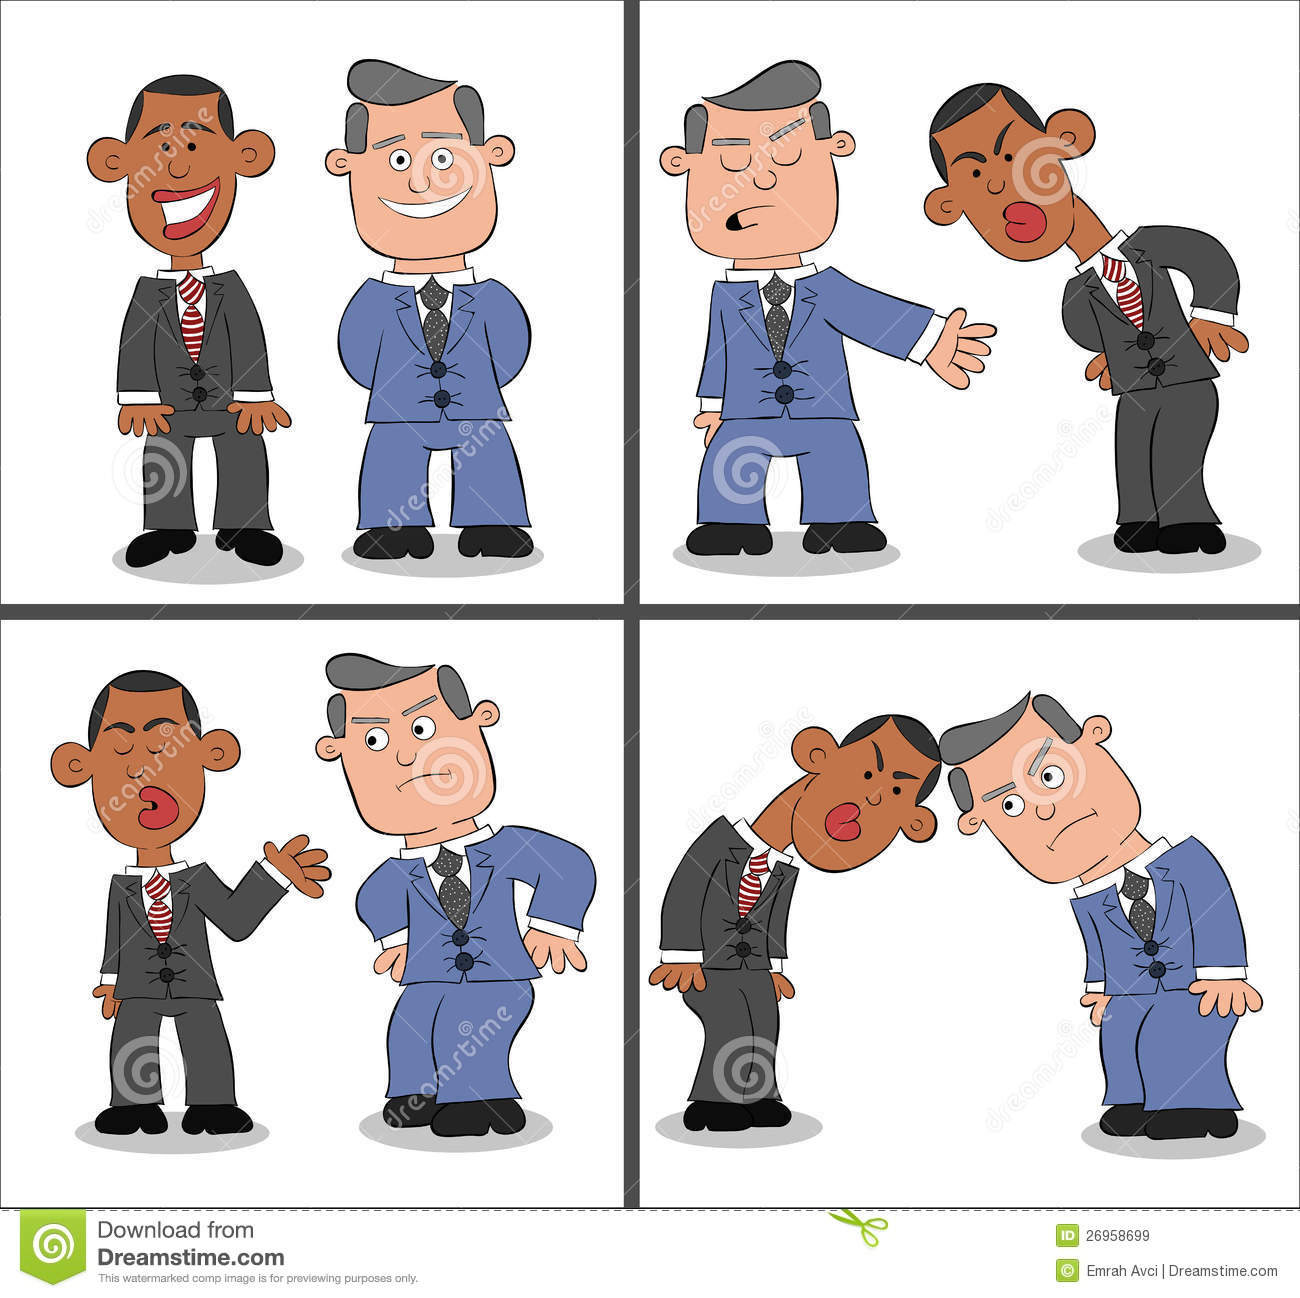 Barack Obama And Mitt Romney Cartoon Editorial Stock Image   Image    